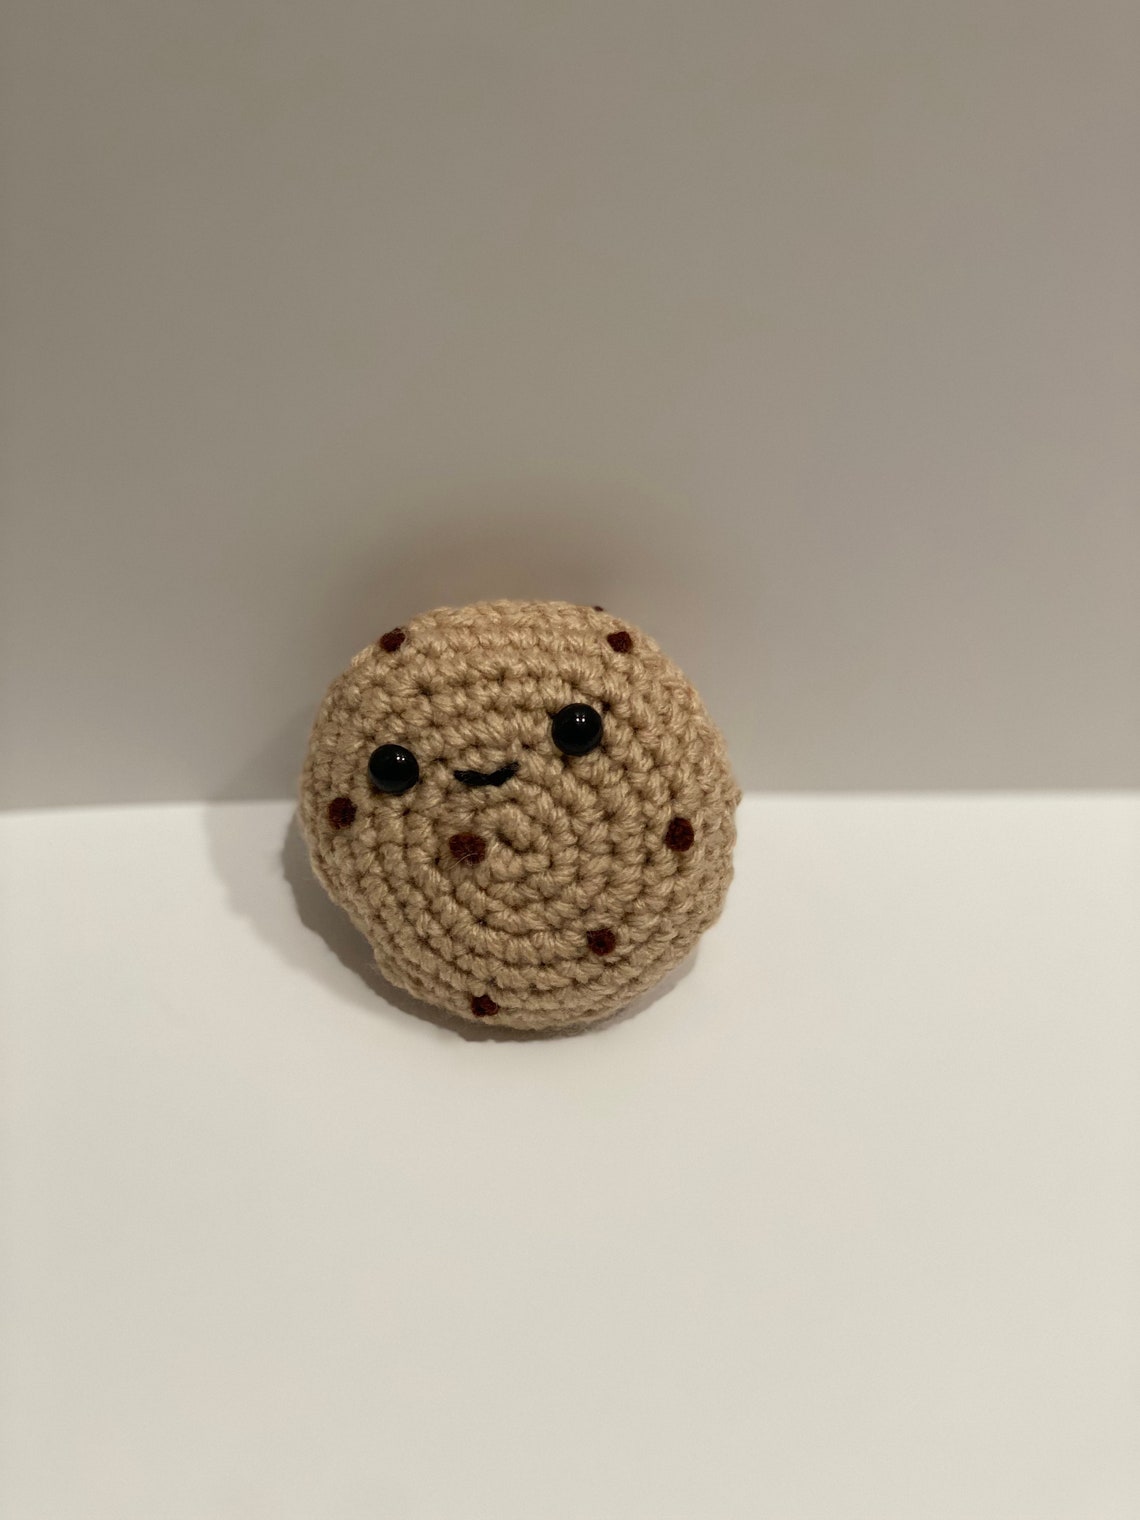 Chocolate Chip Cookie Crochet Stuffed Plushie Toy Handmade | Etsy